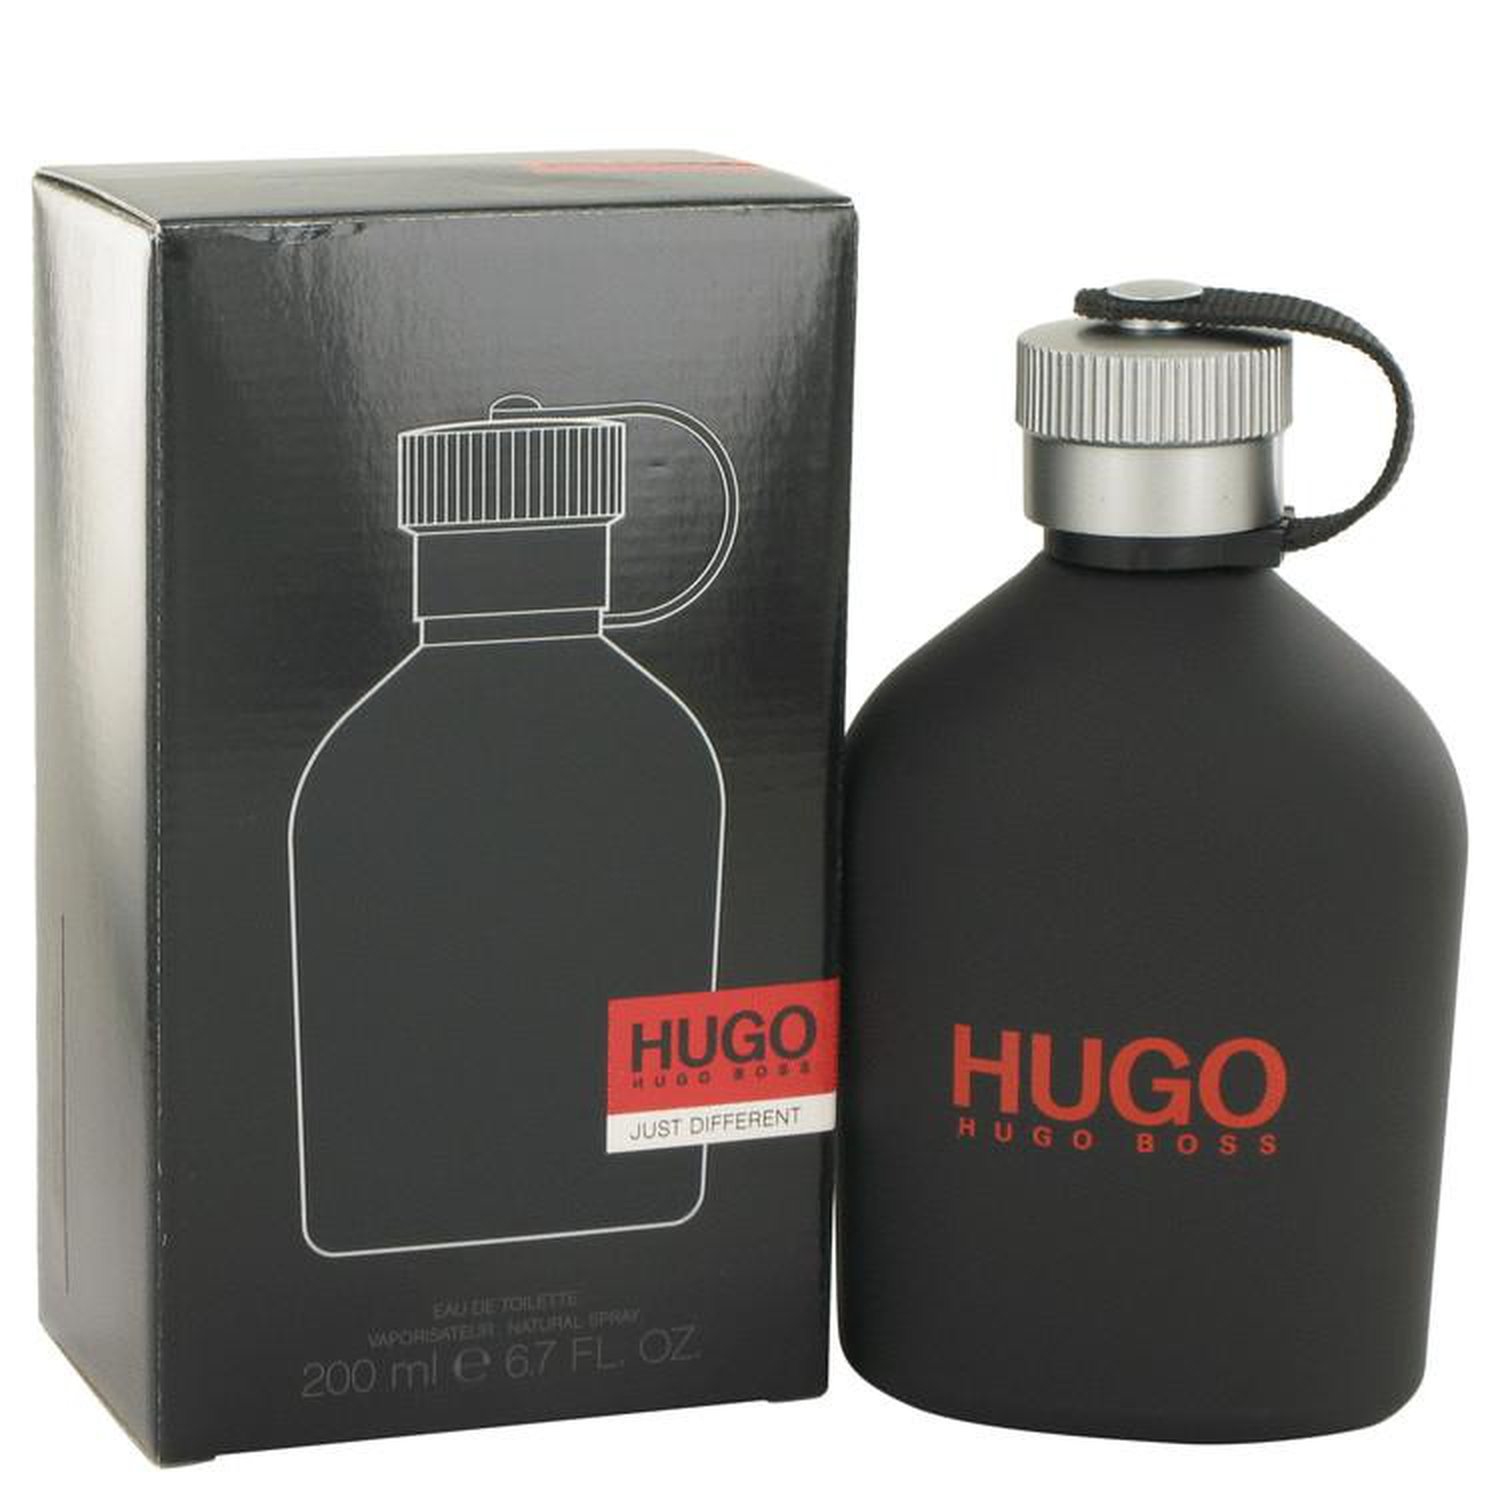 Hugo Just Different By Hugo Boss Edt Spray 6.7 Oz